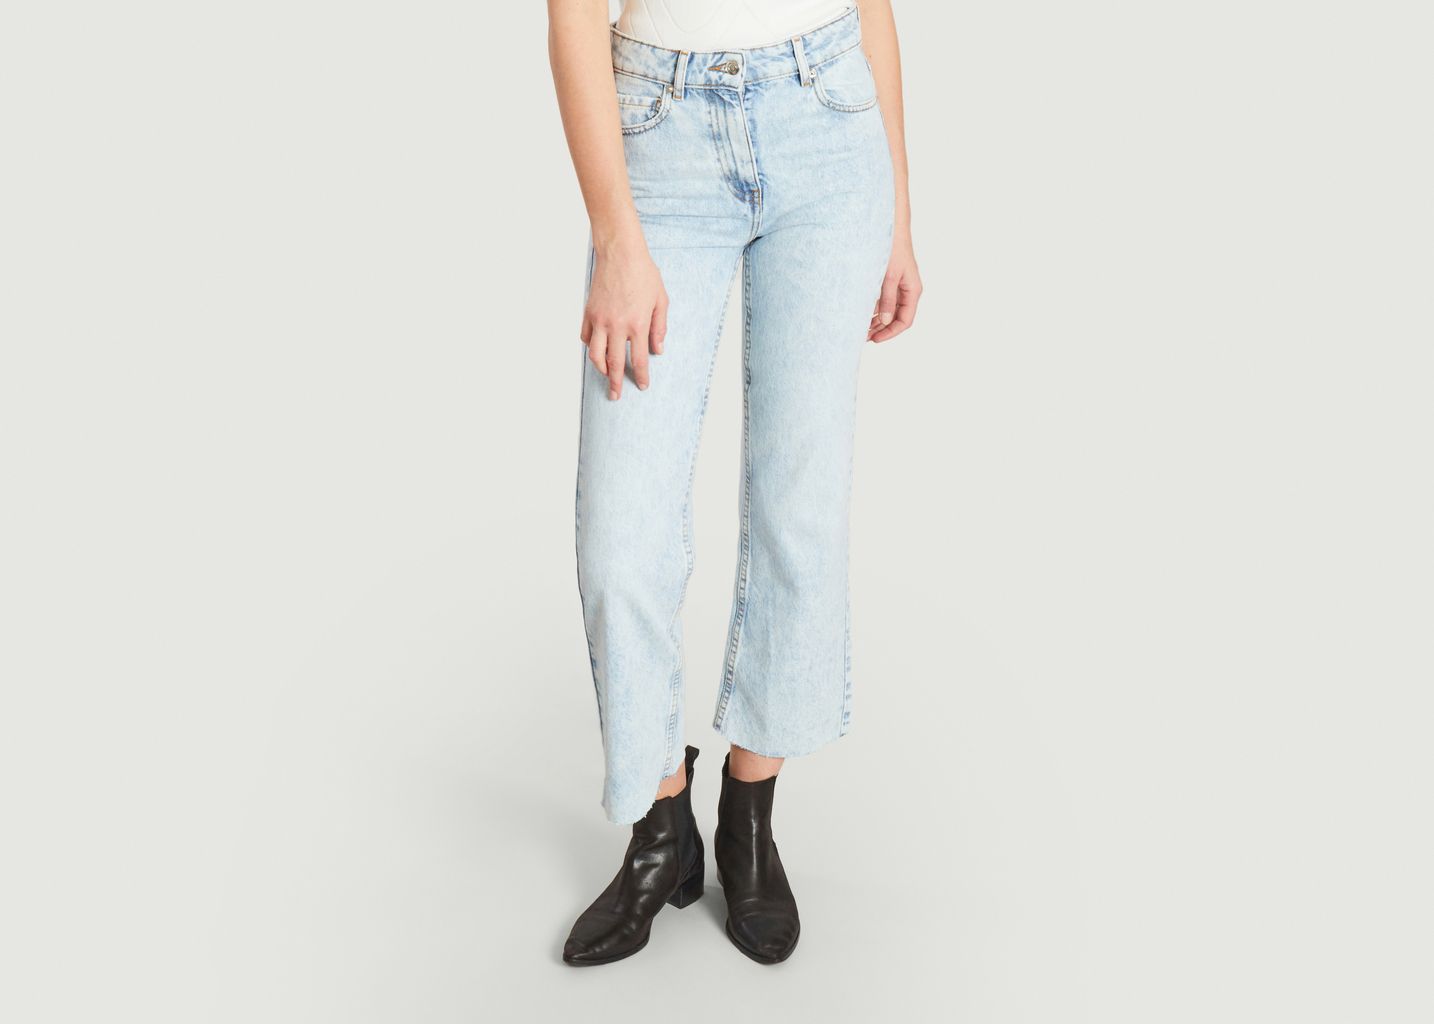 Briollay jeans - IRO